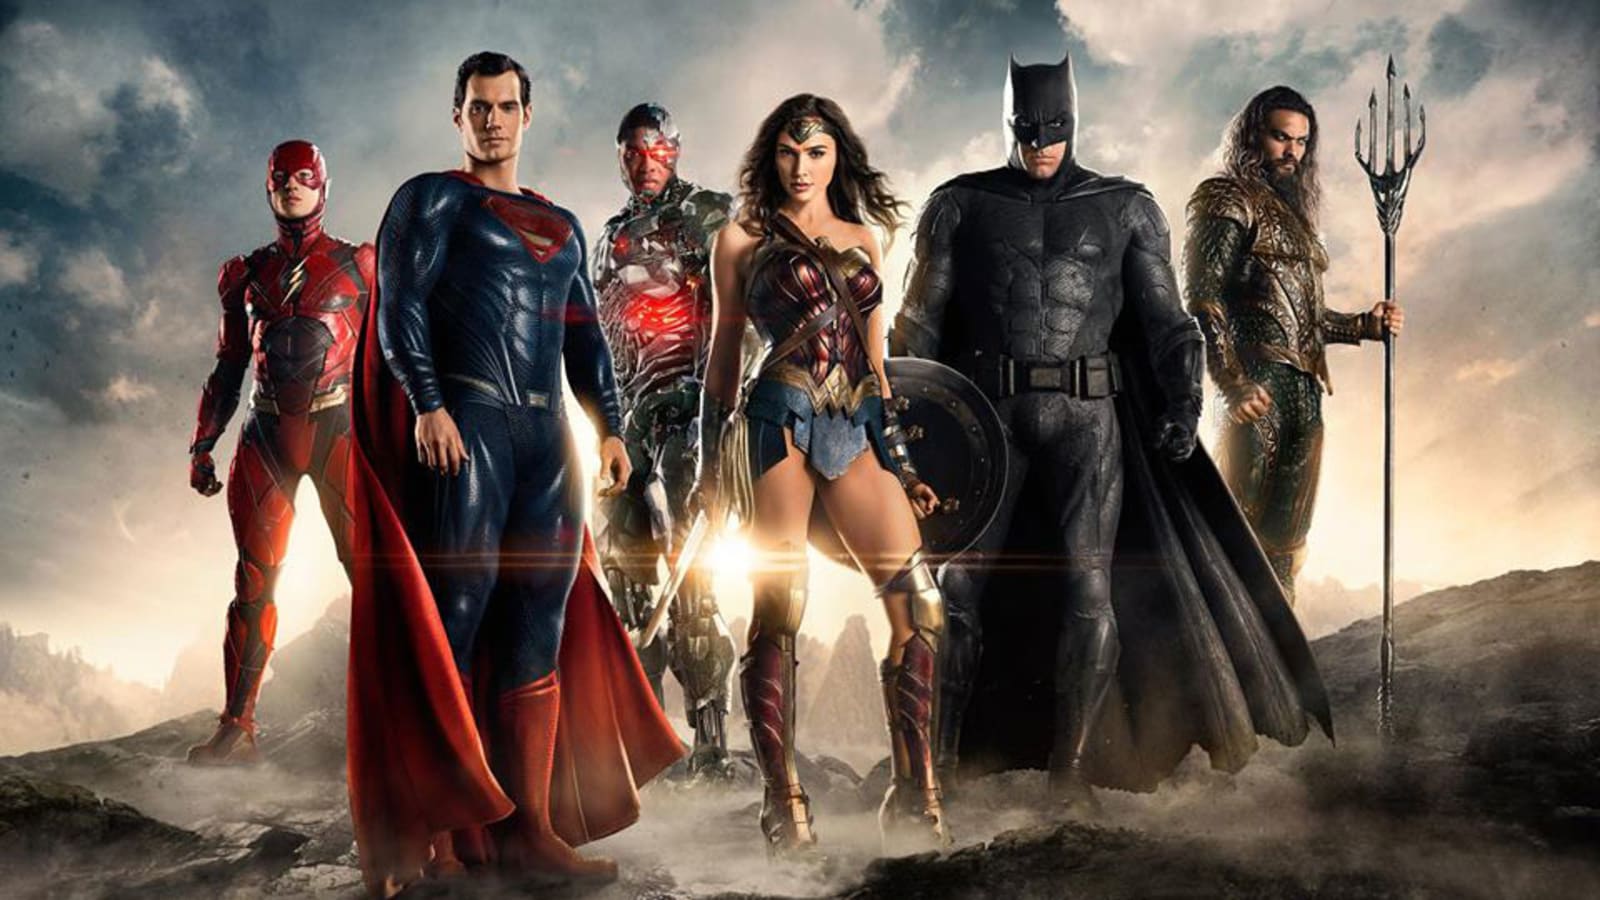 Release 'Snyder Cut'? Sorry, 'Justice League' fans, Warner won't